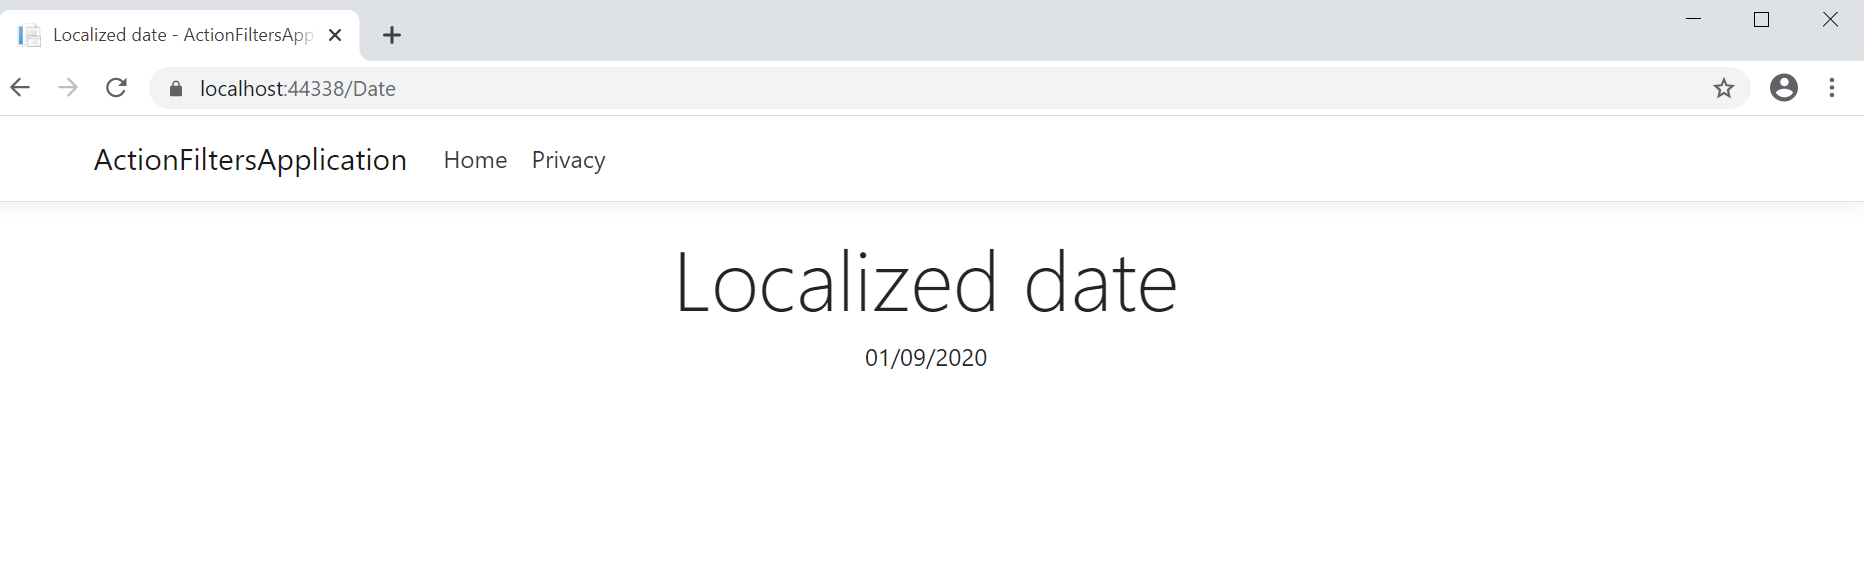 localized date